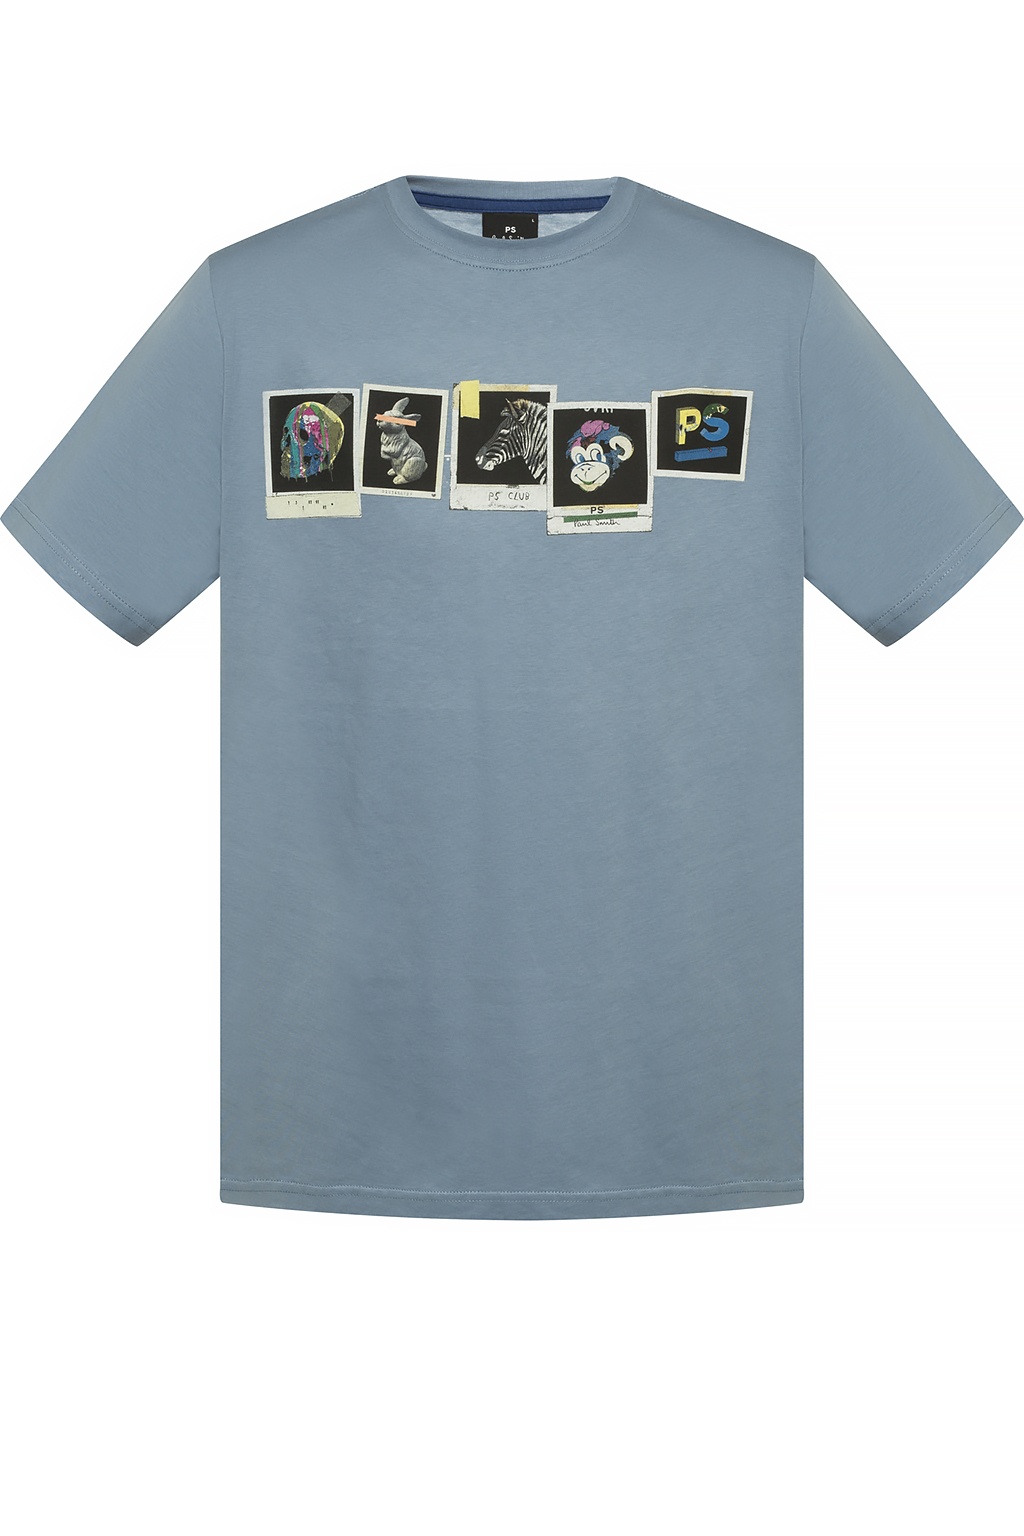 michael kors t shirt womens 2015